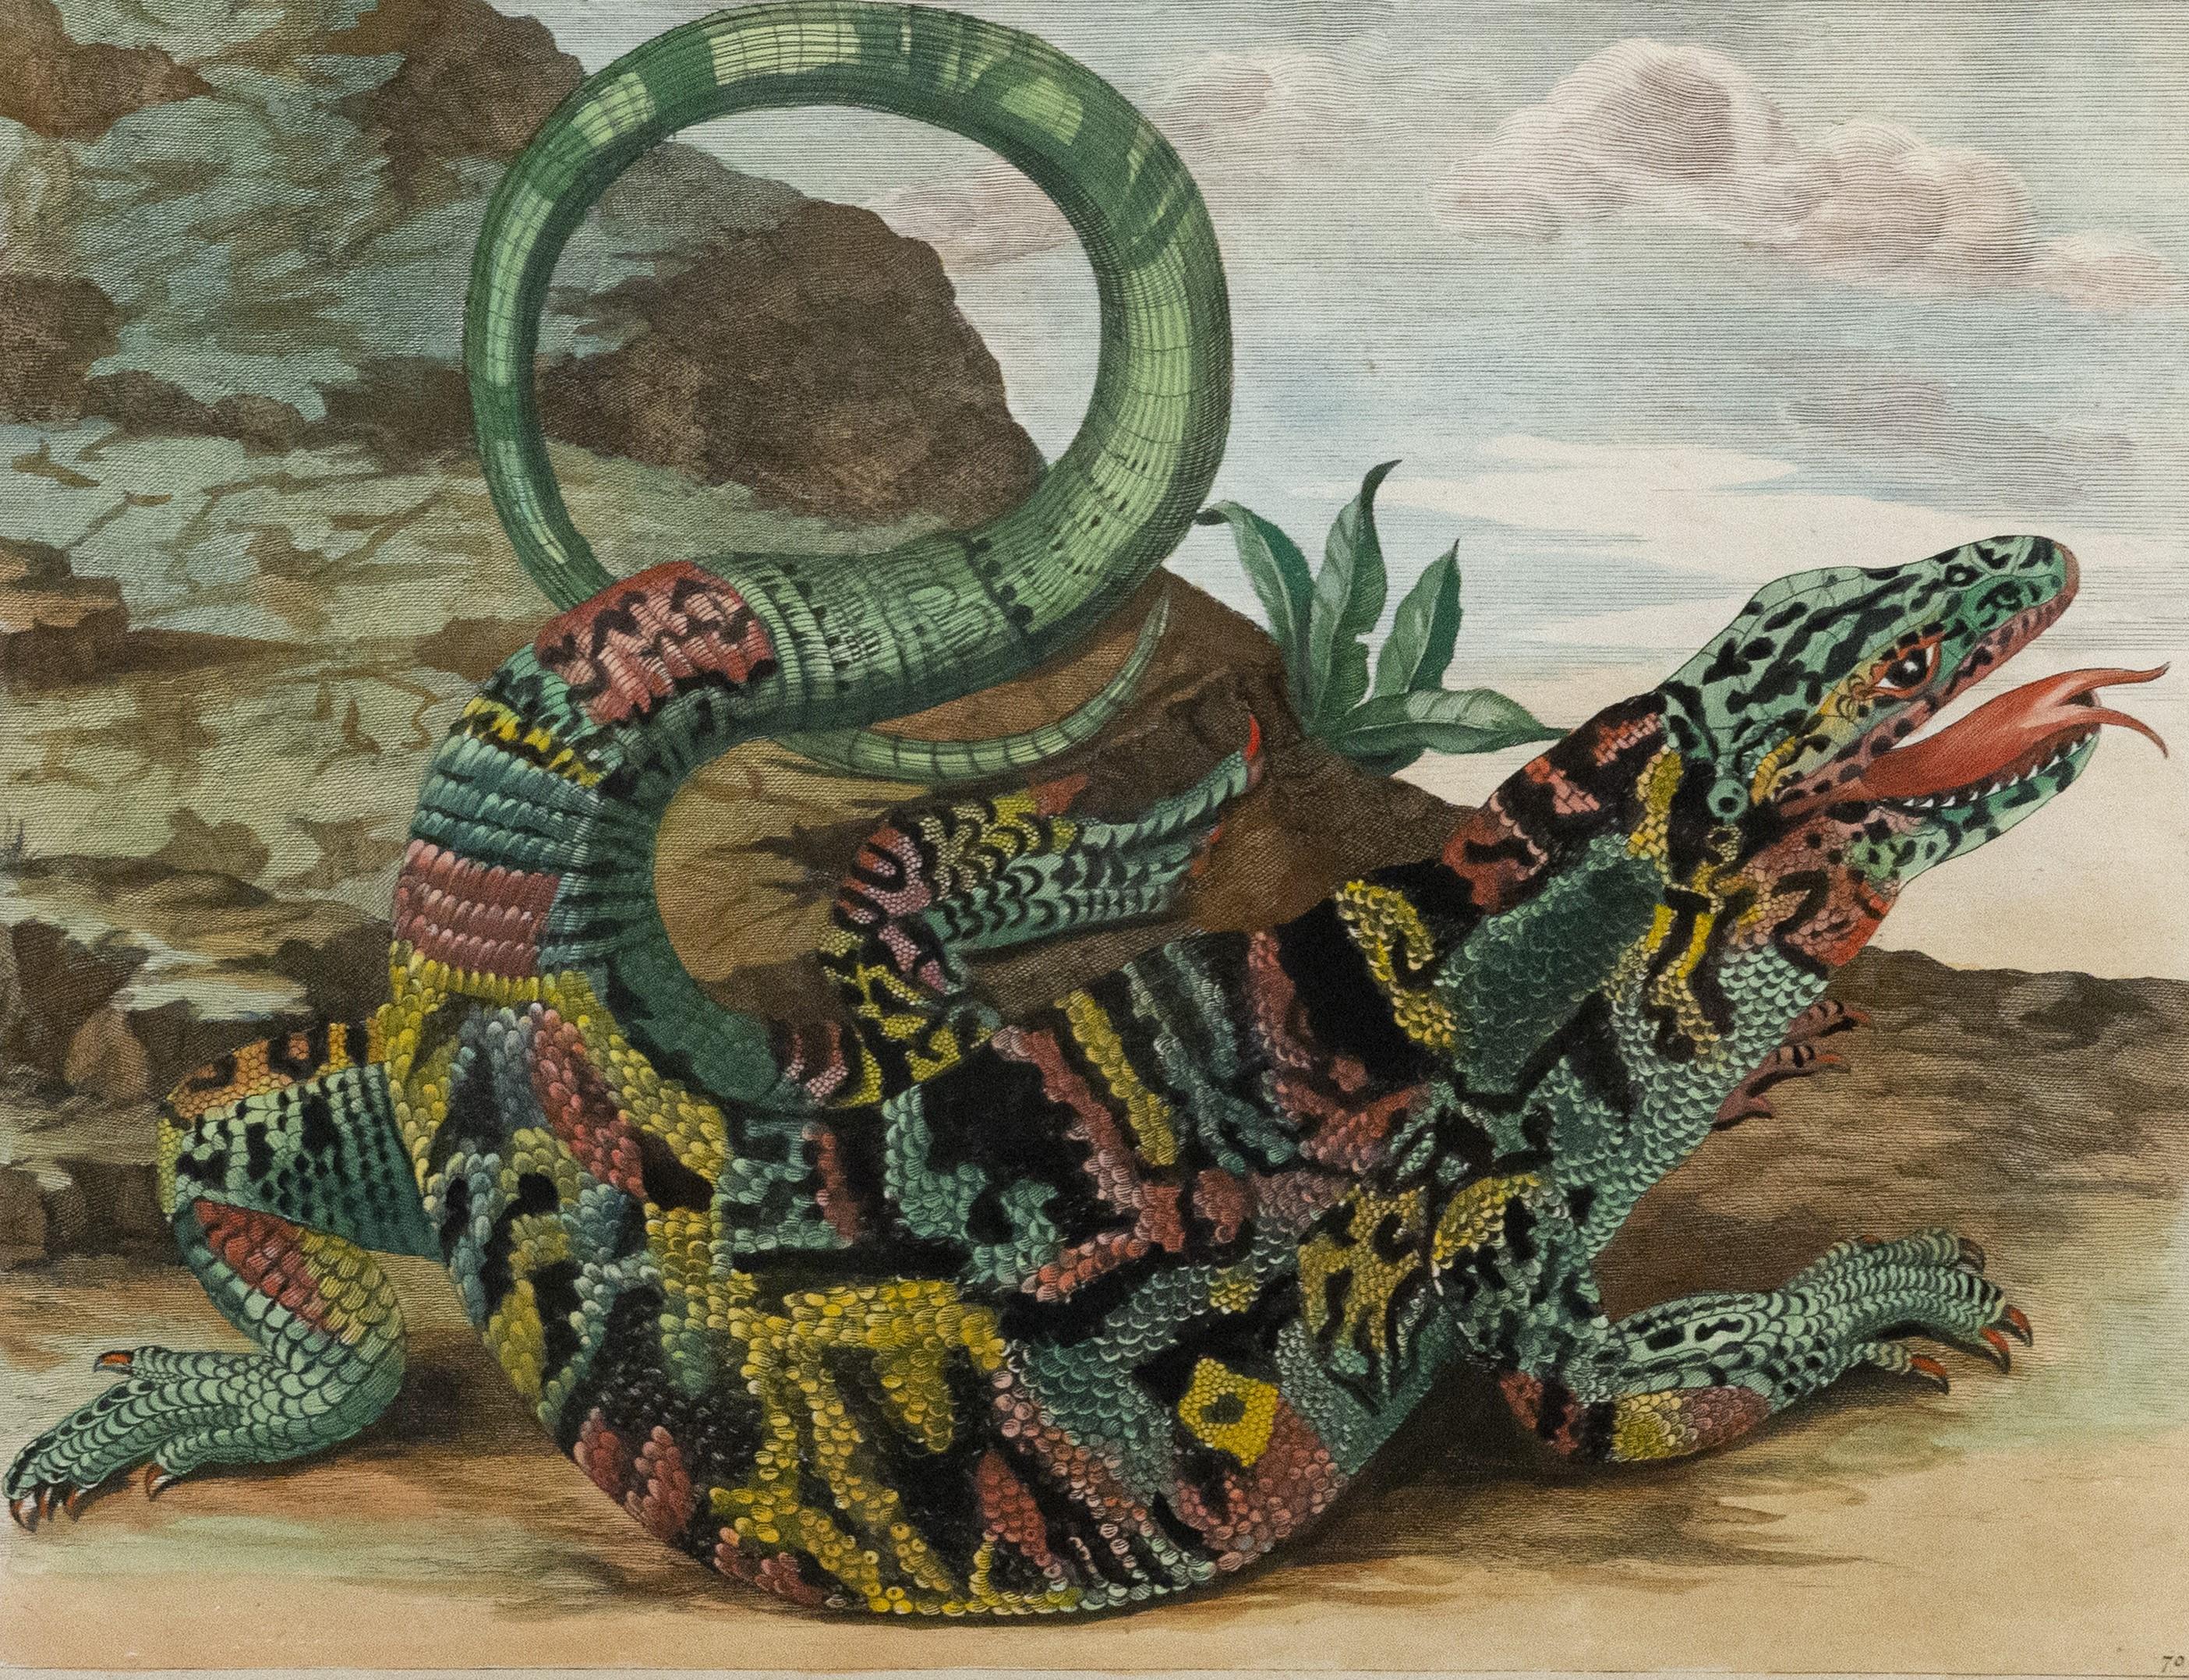 alligator and snake fight